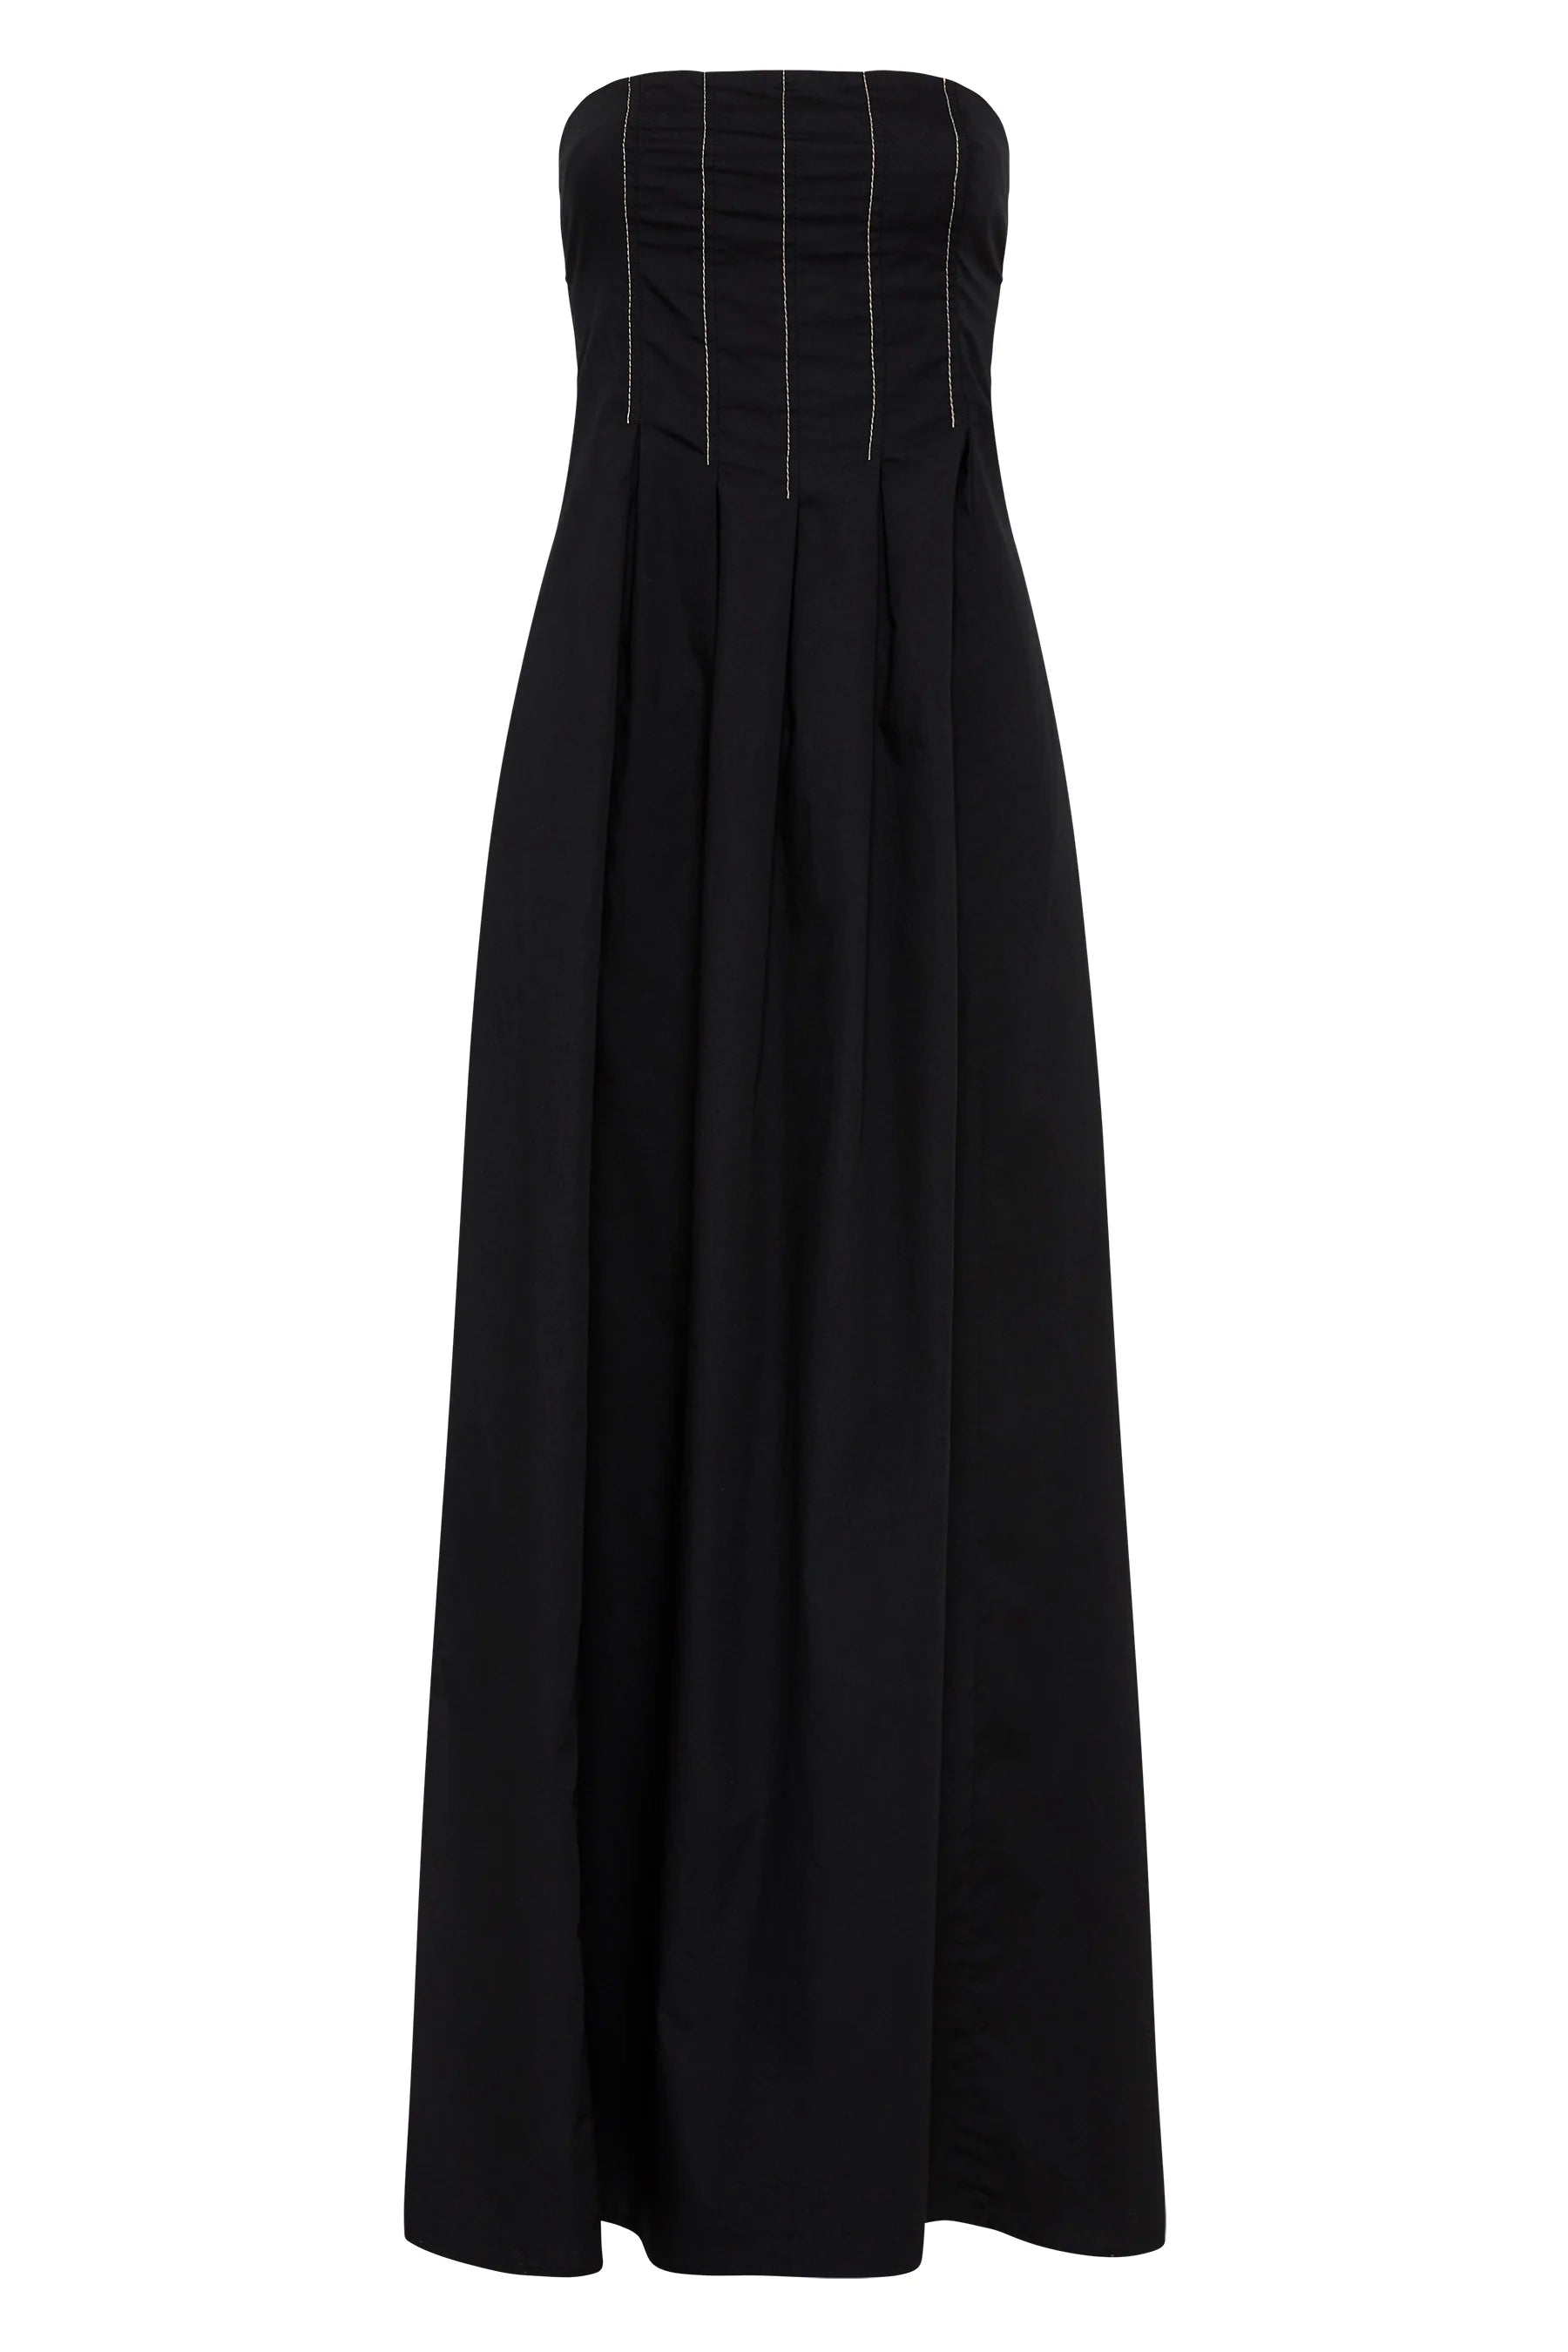 Bassike Poplin Strapless Dress - Black | Denim Iniquity